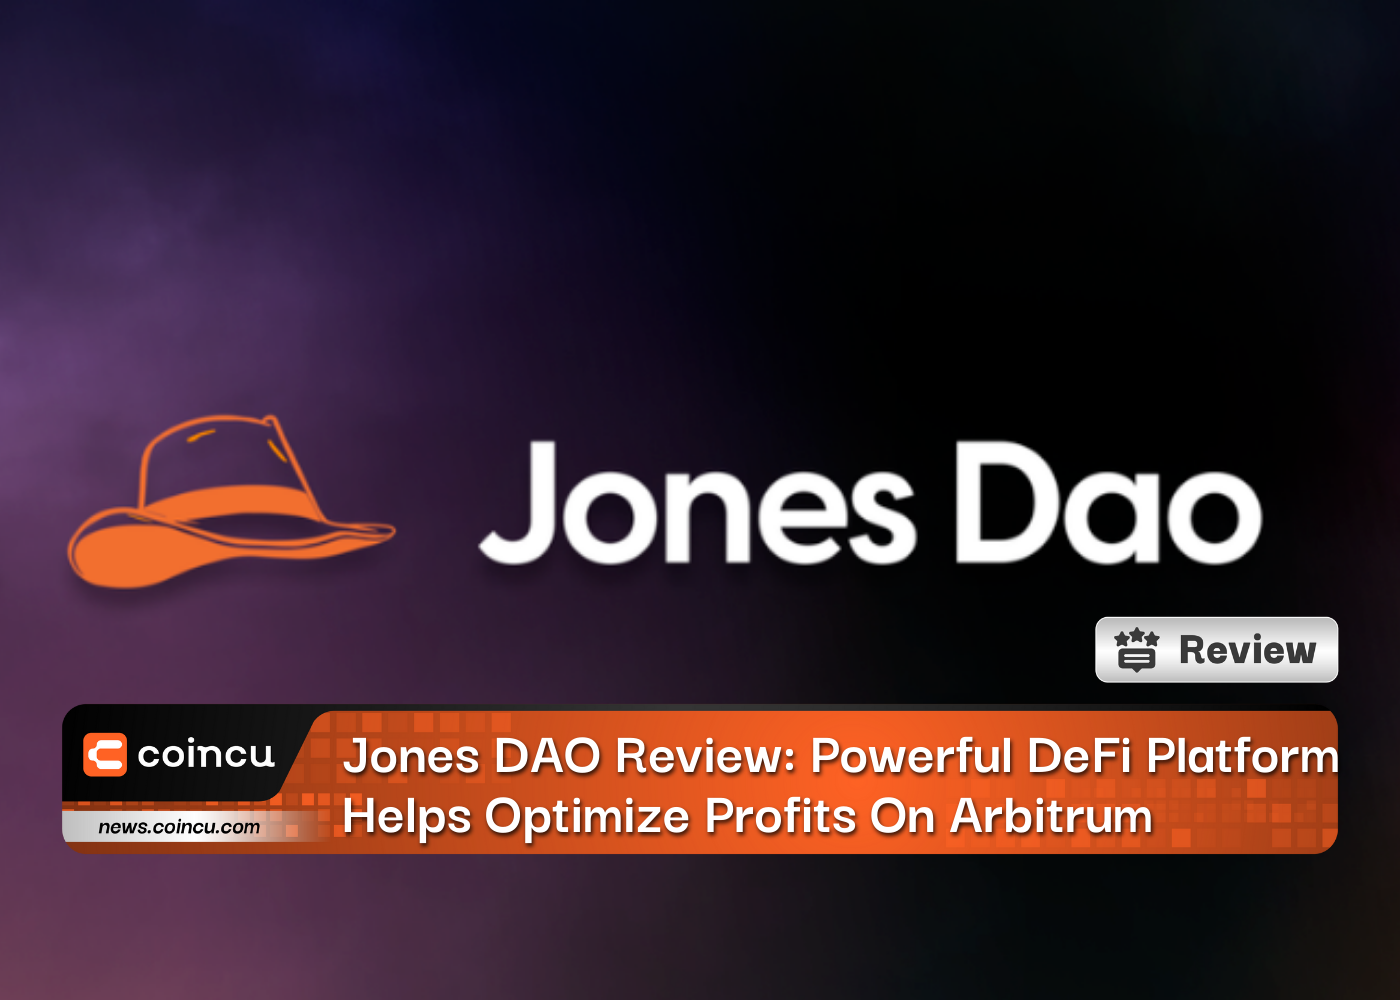 Jones DAO Review: Leistungsstarke DeFi-Plattform hilft bei der Gewinnoptimierung bei Arbitrum